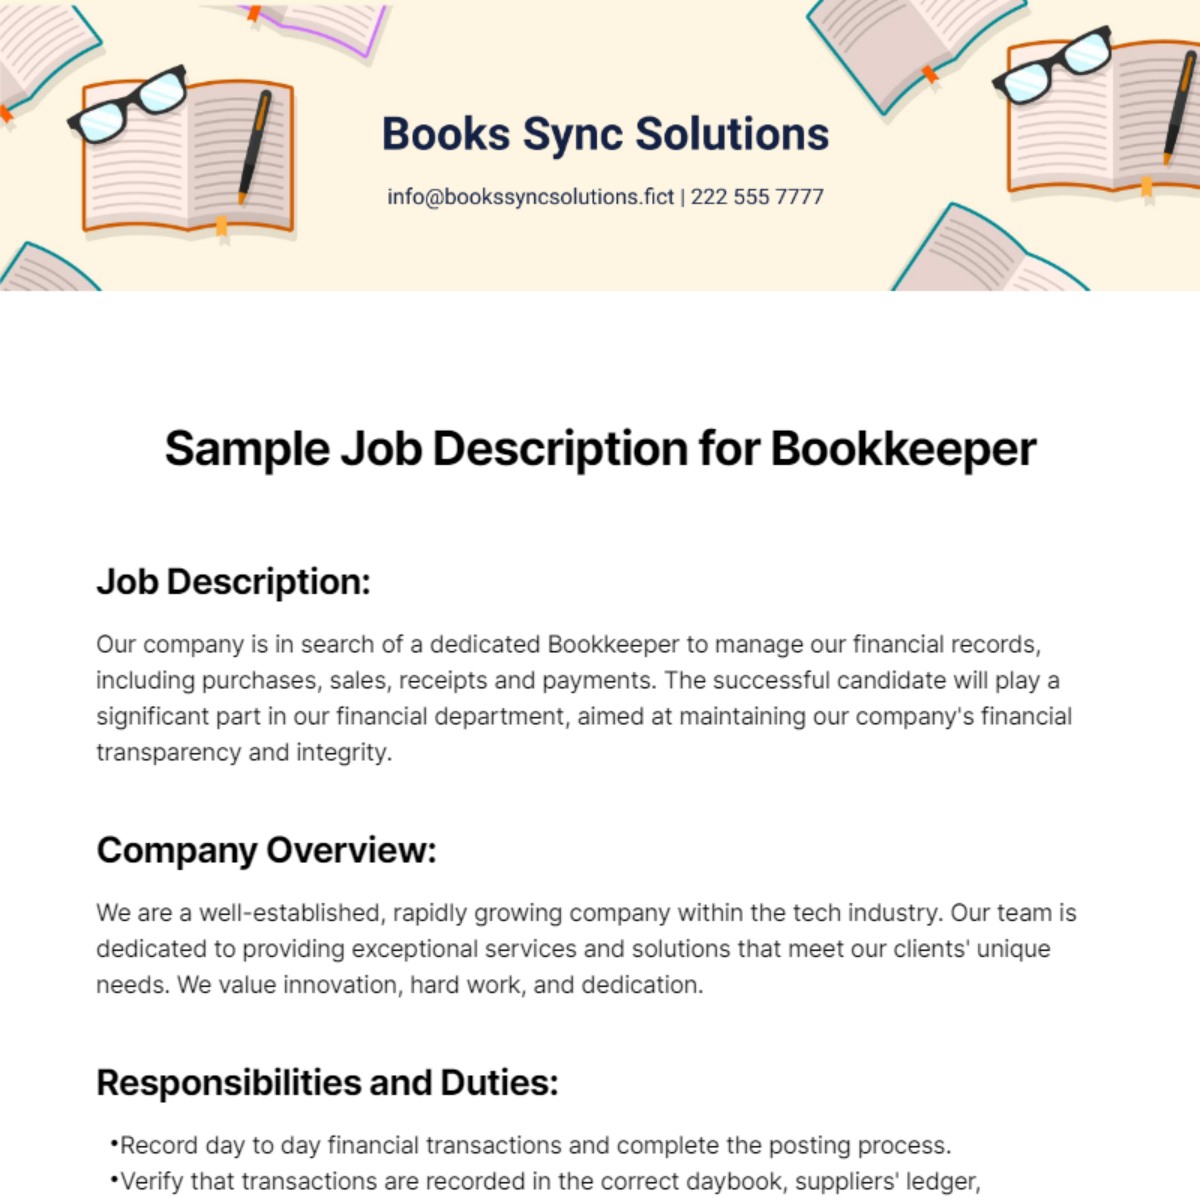 Sample Job Description for Bookkeeper Template